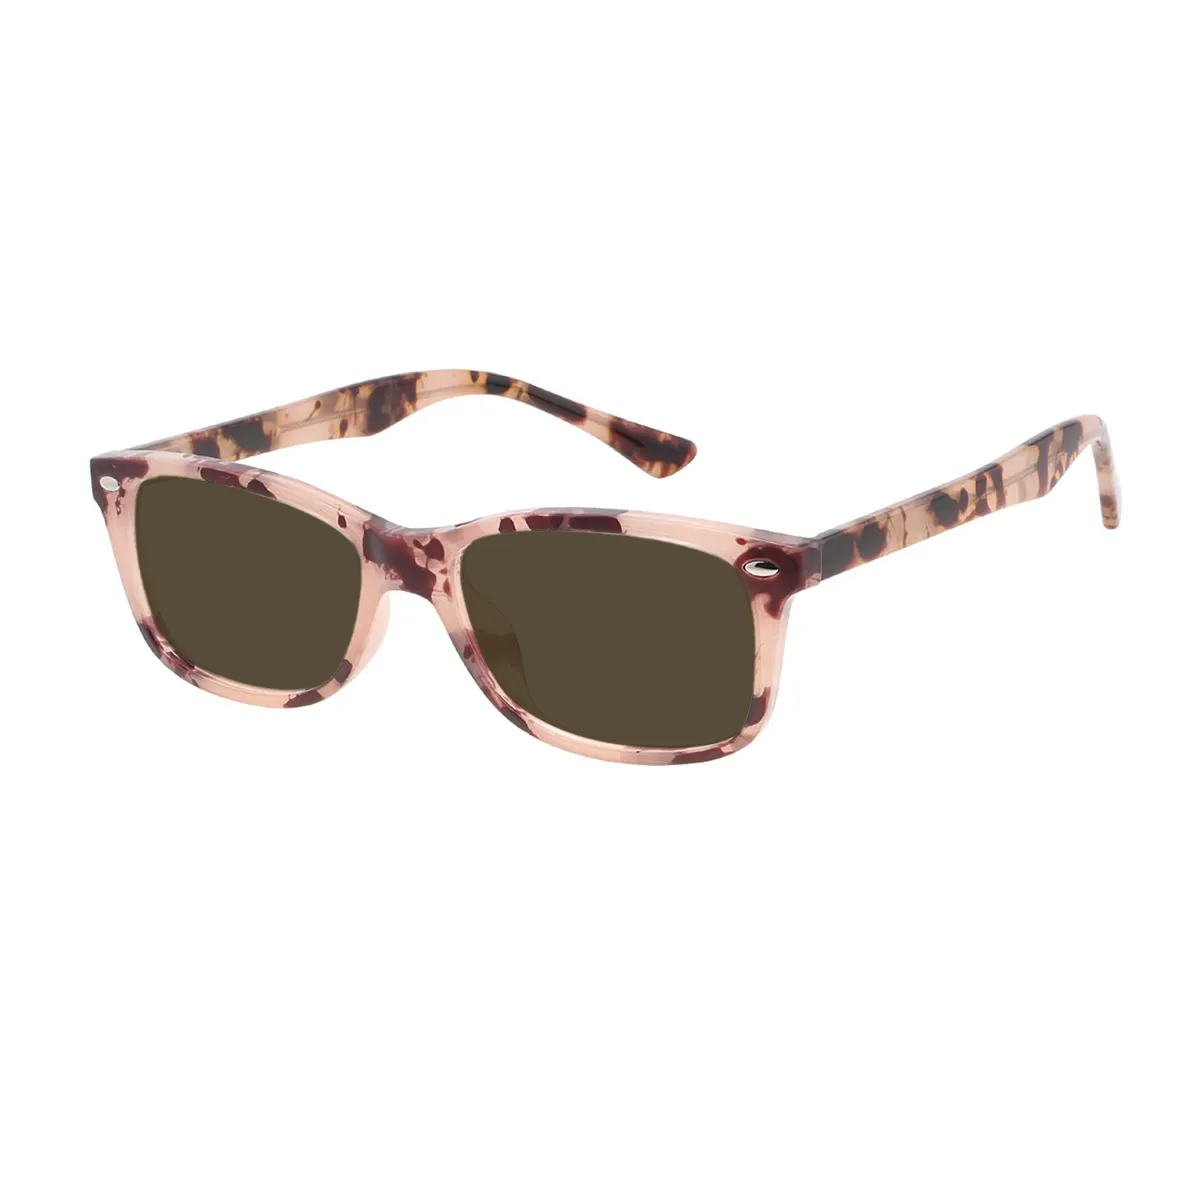 Leonora - Rectangle Tortoiseshell Sunglasses for Women